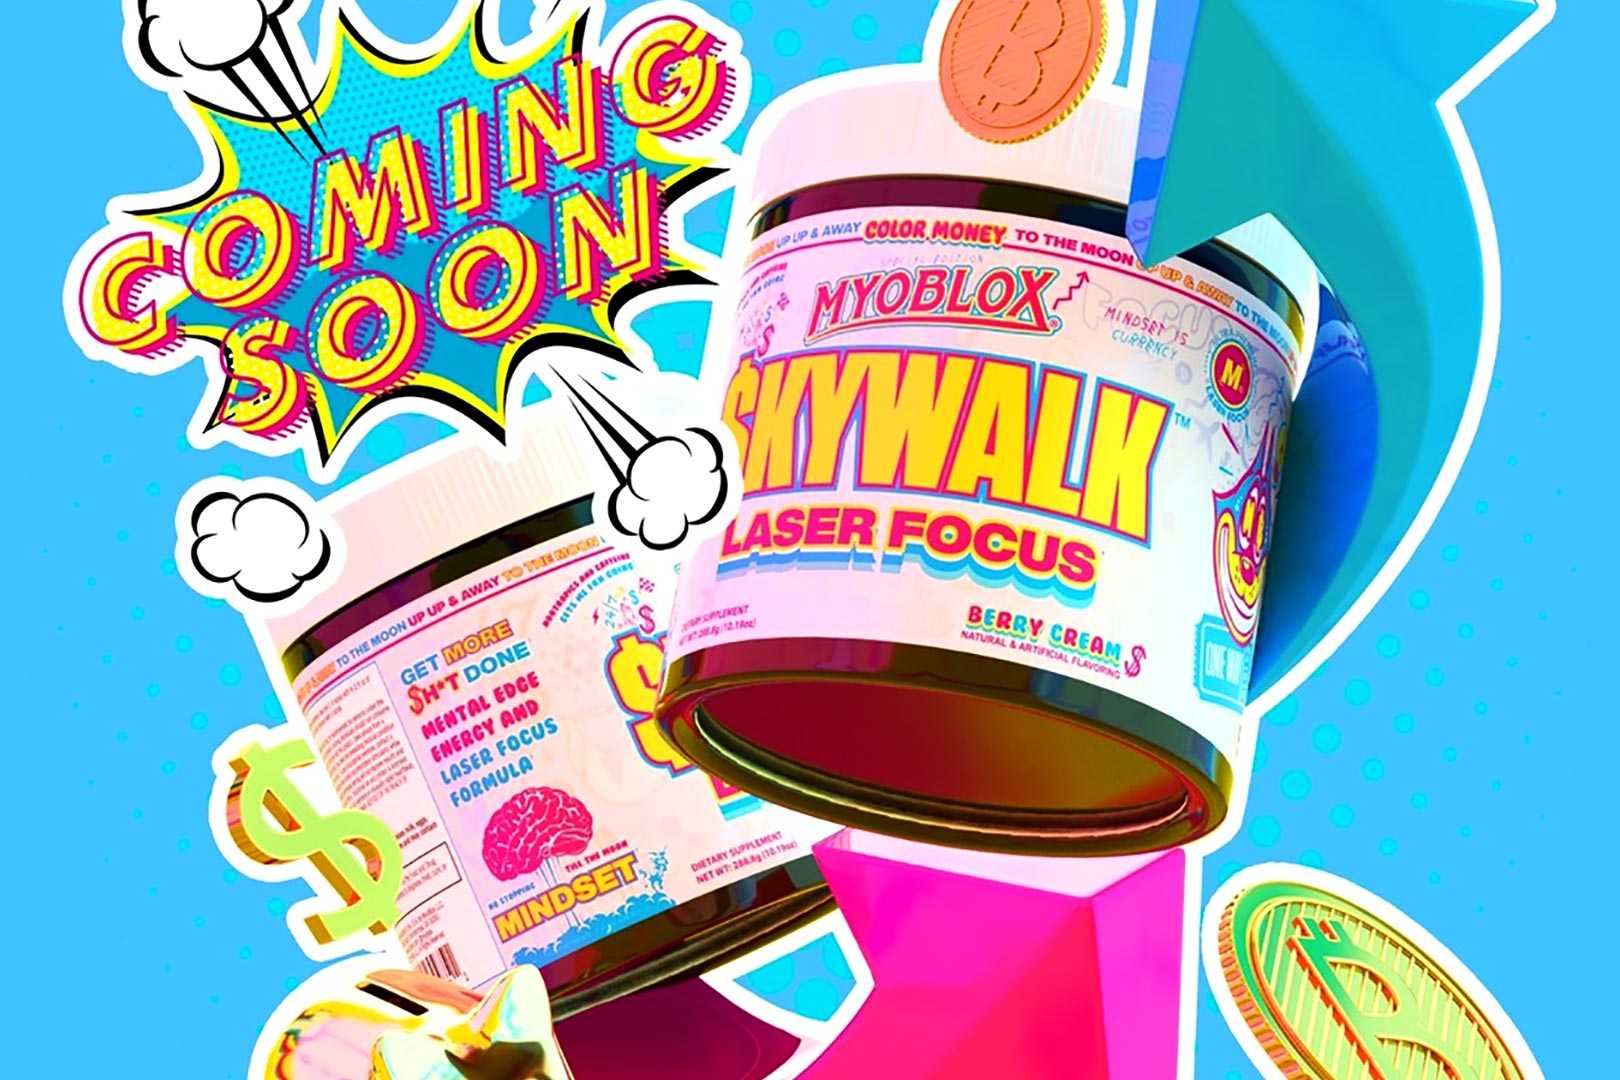 Myoblox Unveils its Color Money version of Skywalk